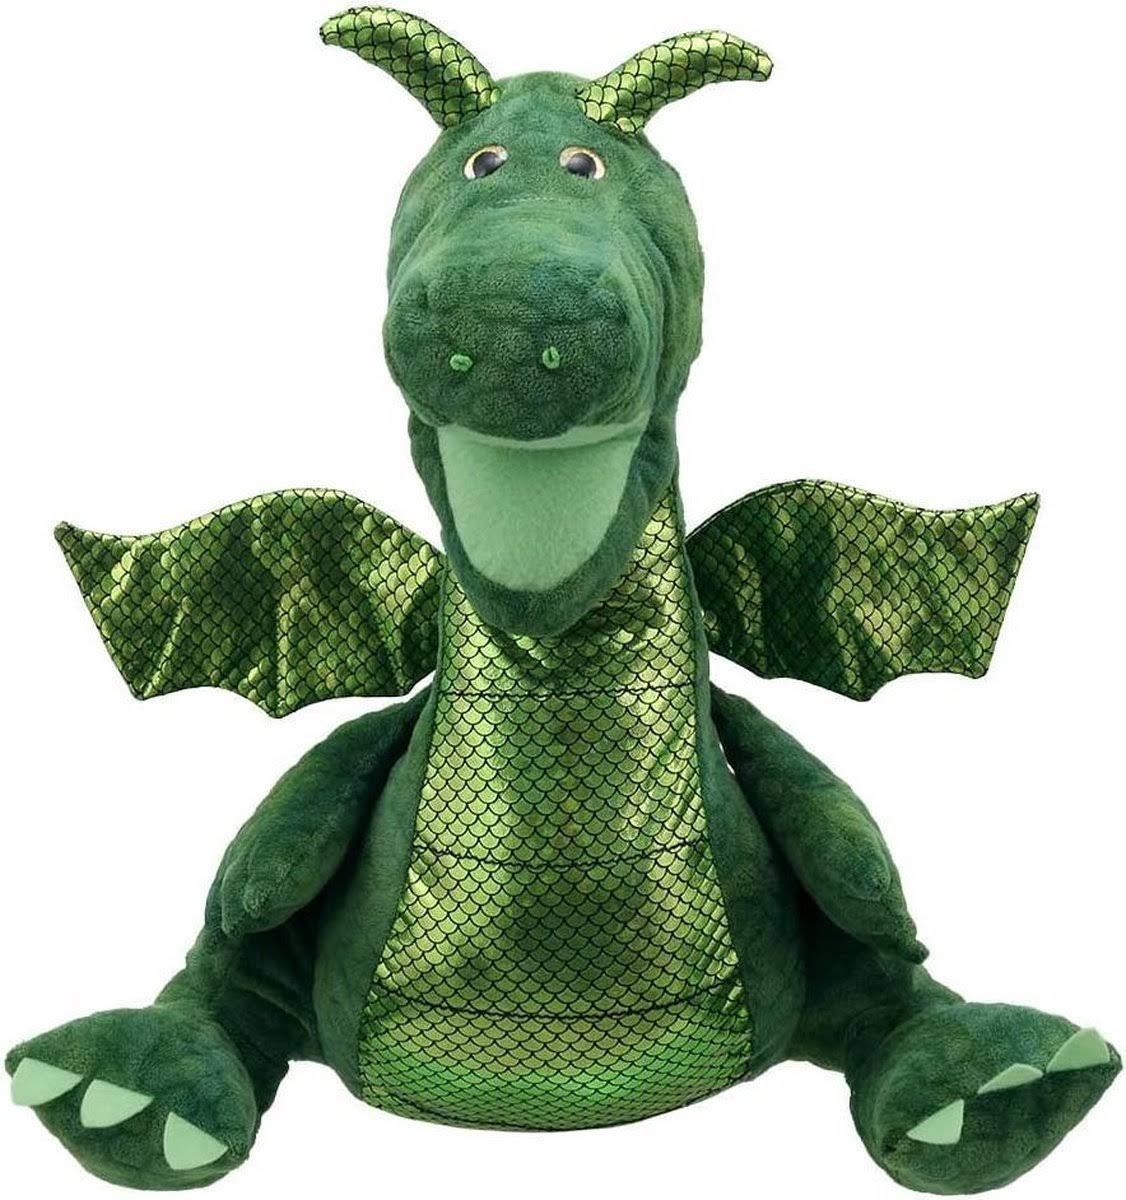 The Puppet Company - Enchanted Dragons - Dragon (Green)